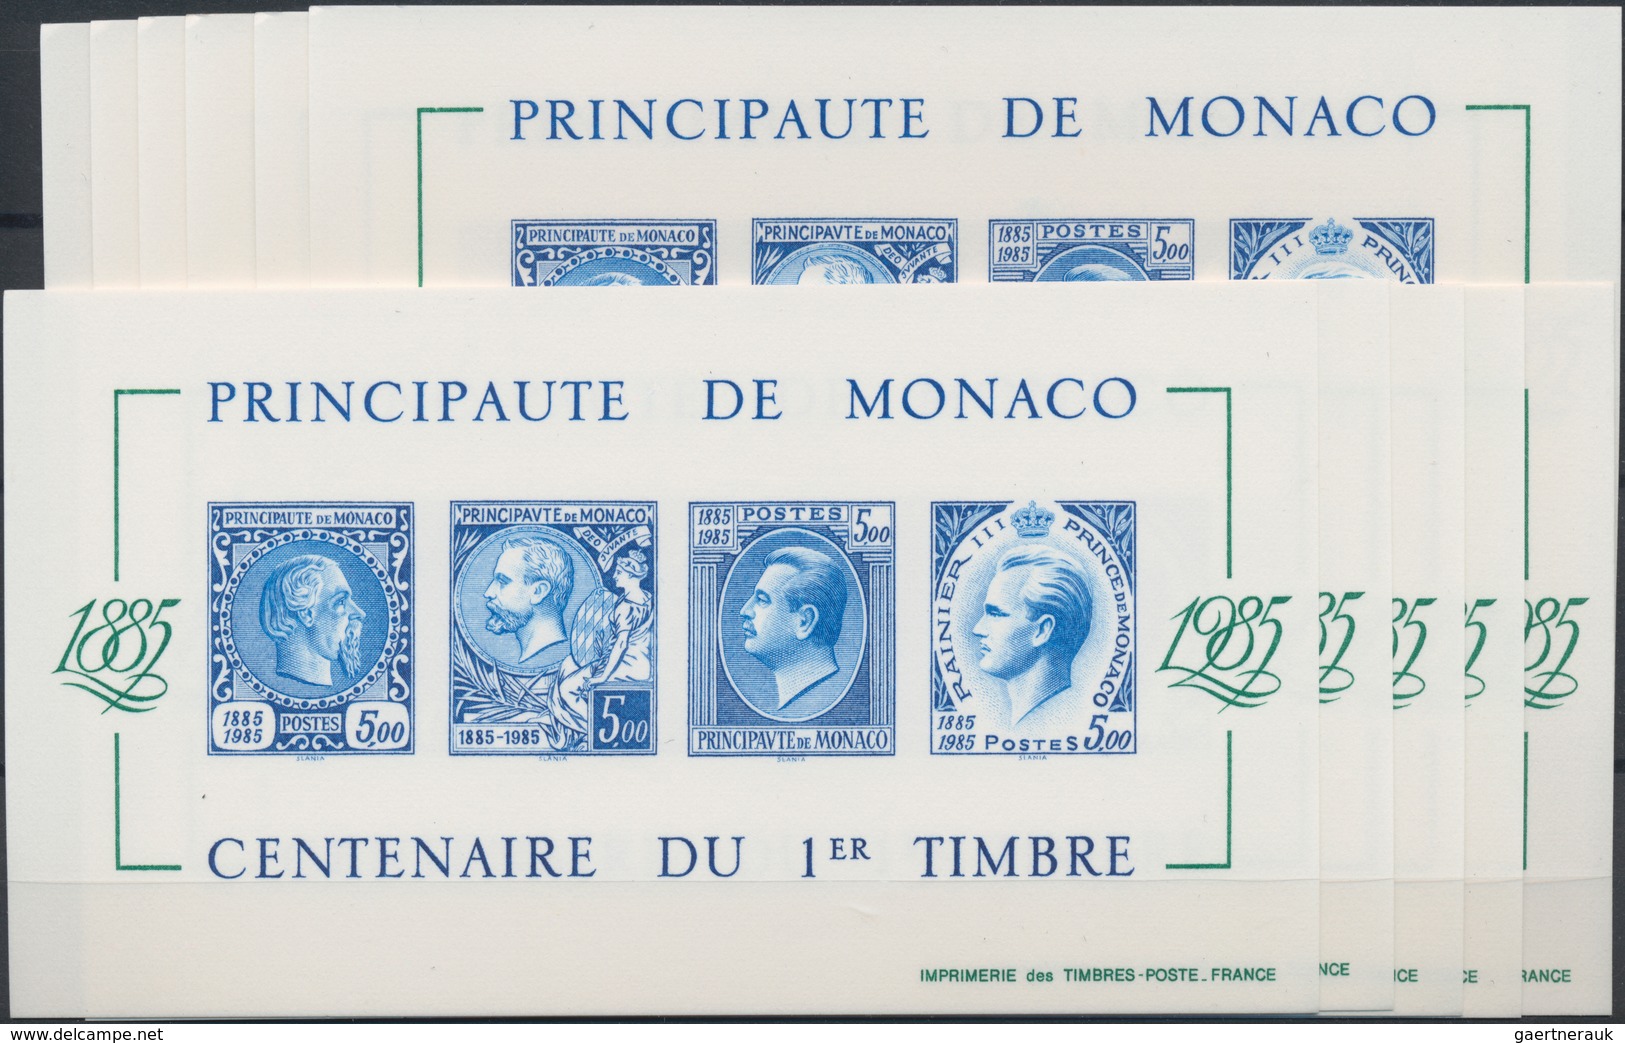 Monaco: 1985, Stamp Centenary Souvenir Sheet, Epreuve De Luxe On Thick Unwatermarked Paper And PTT I - Oblitérés